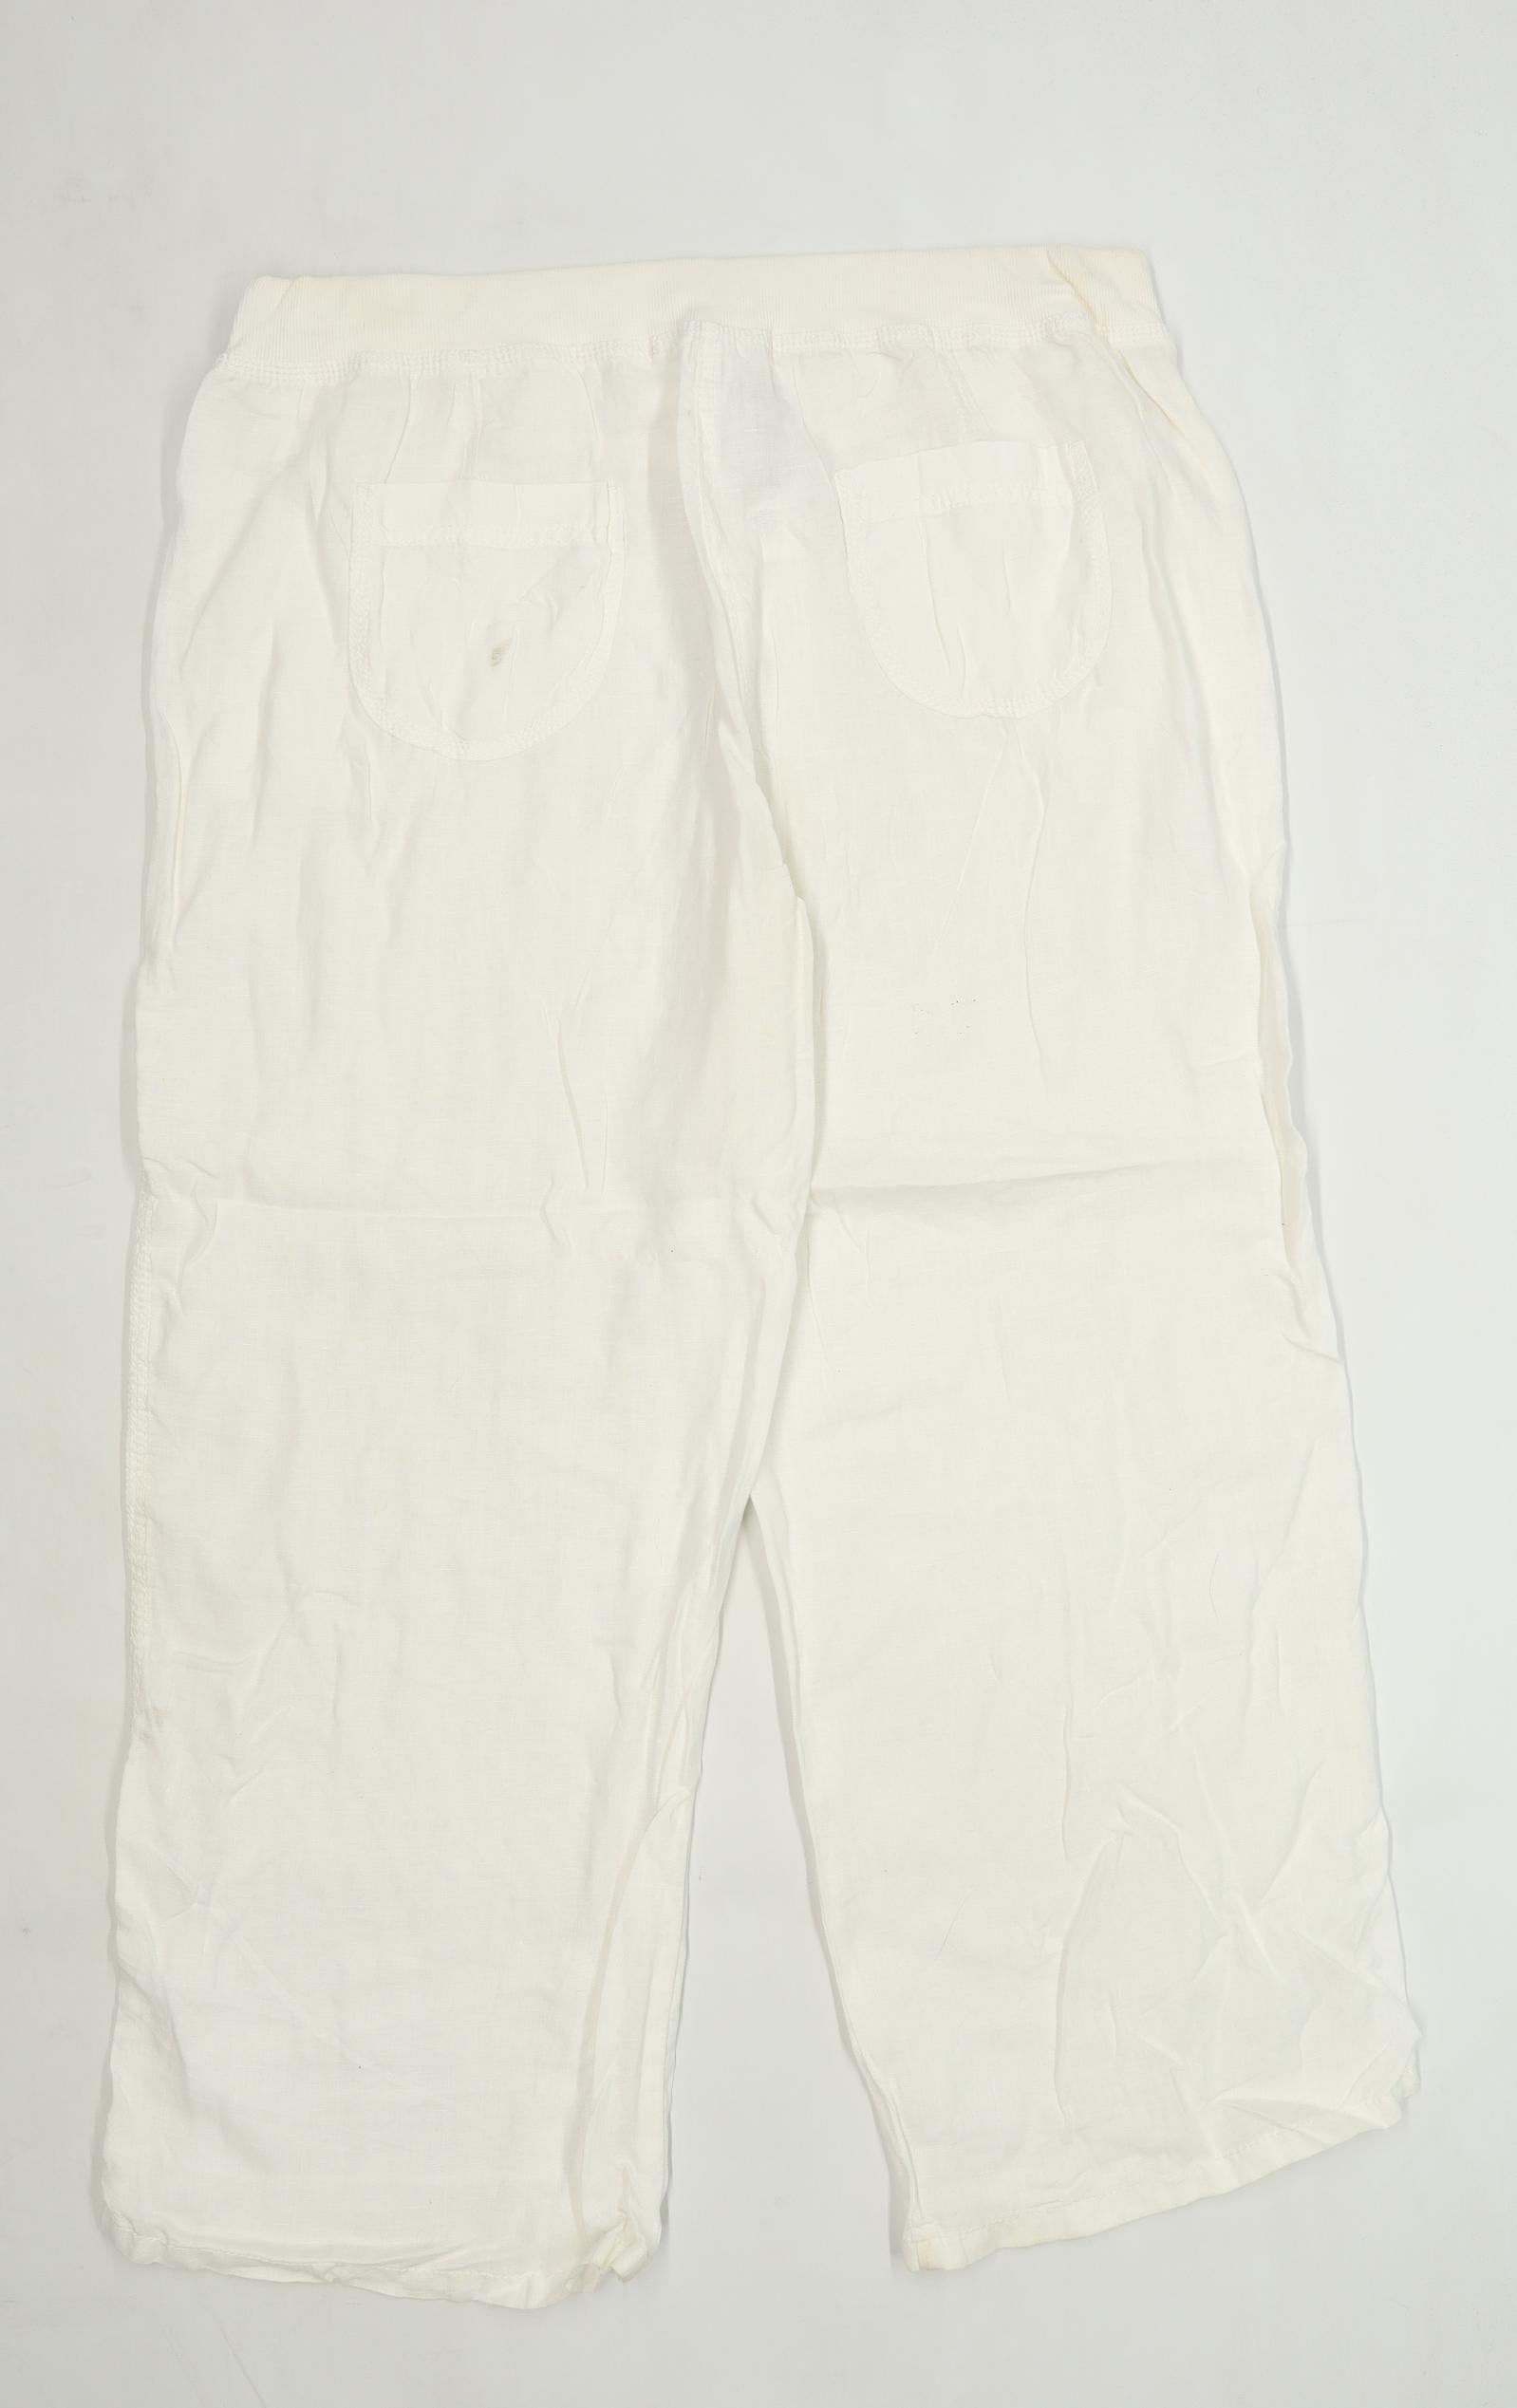 Buy Marks  Spencer Women White Slim Fit Solid Regular Cropped Trousers  online  Looksgudin